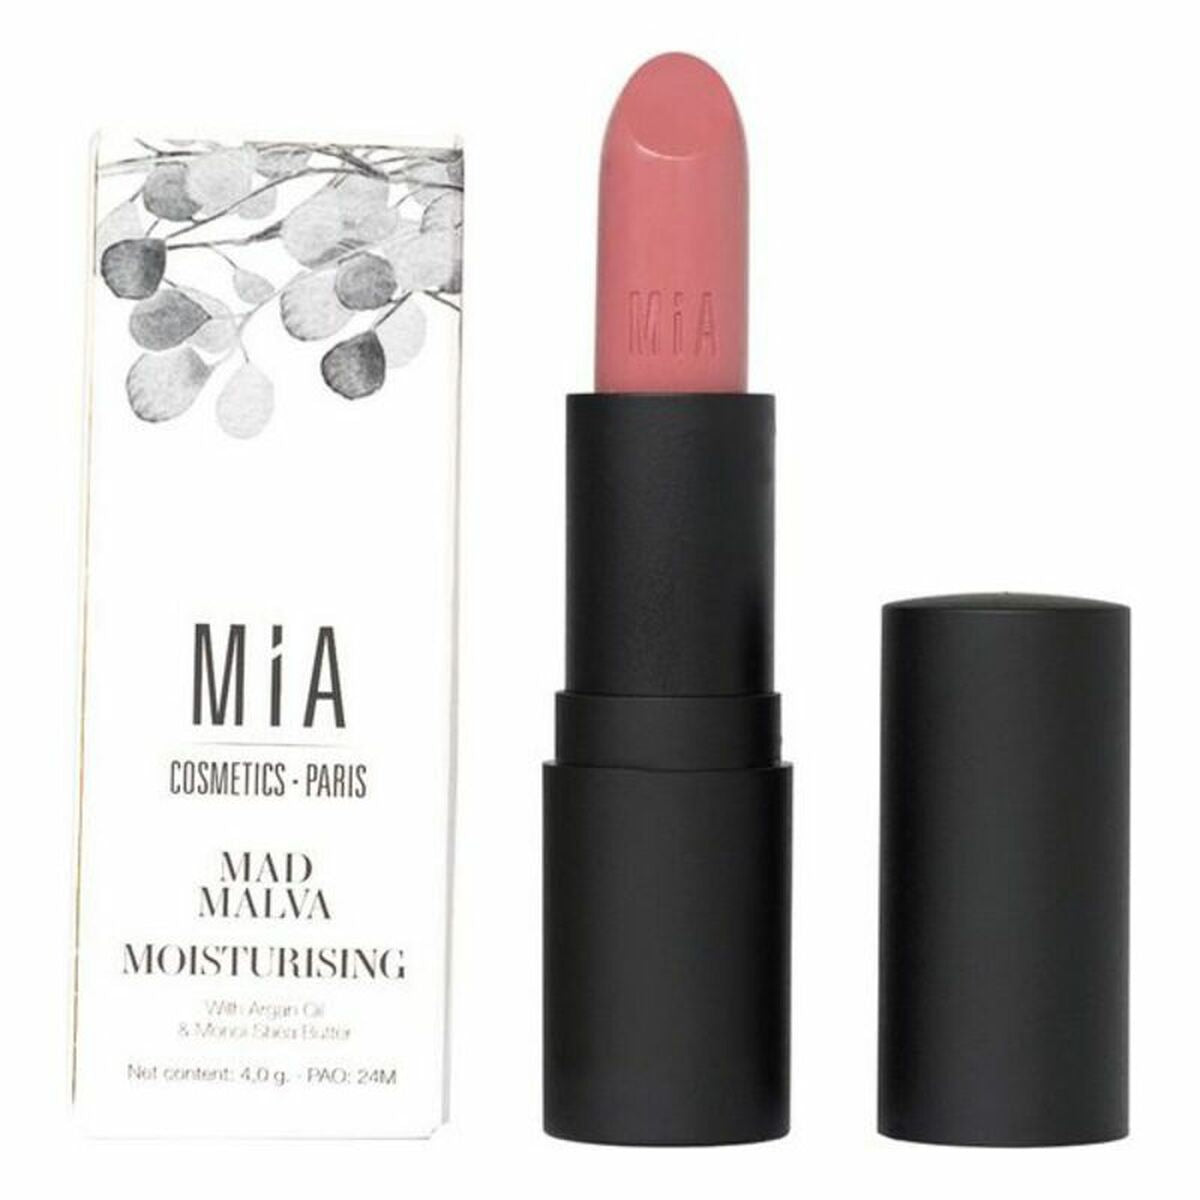 Feuchtigkeitsspendender Lippenstift Mia Cosmetics Paris 507-Mad Malva (4 g) - CA International 